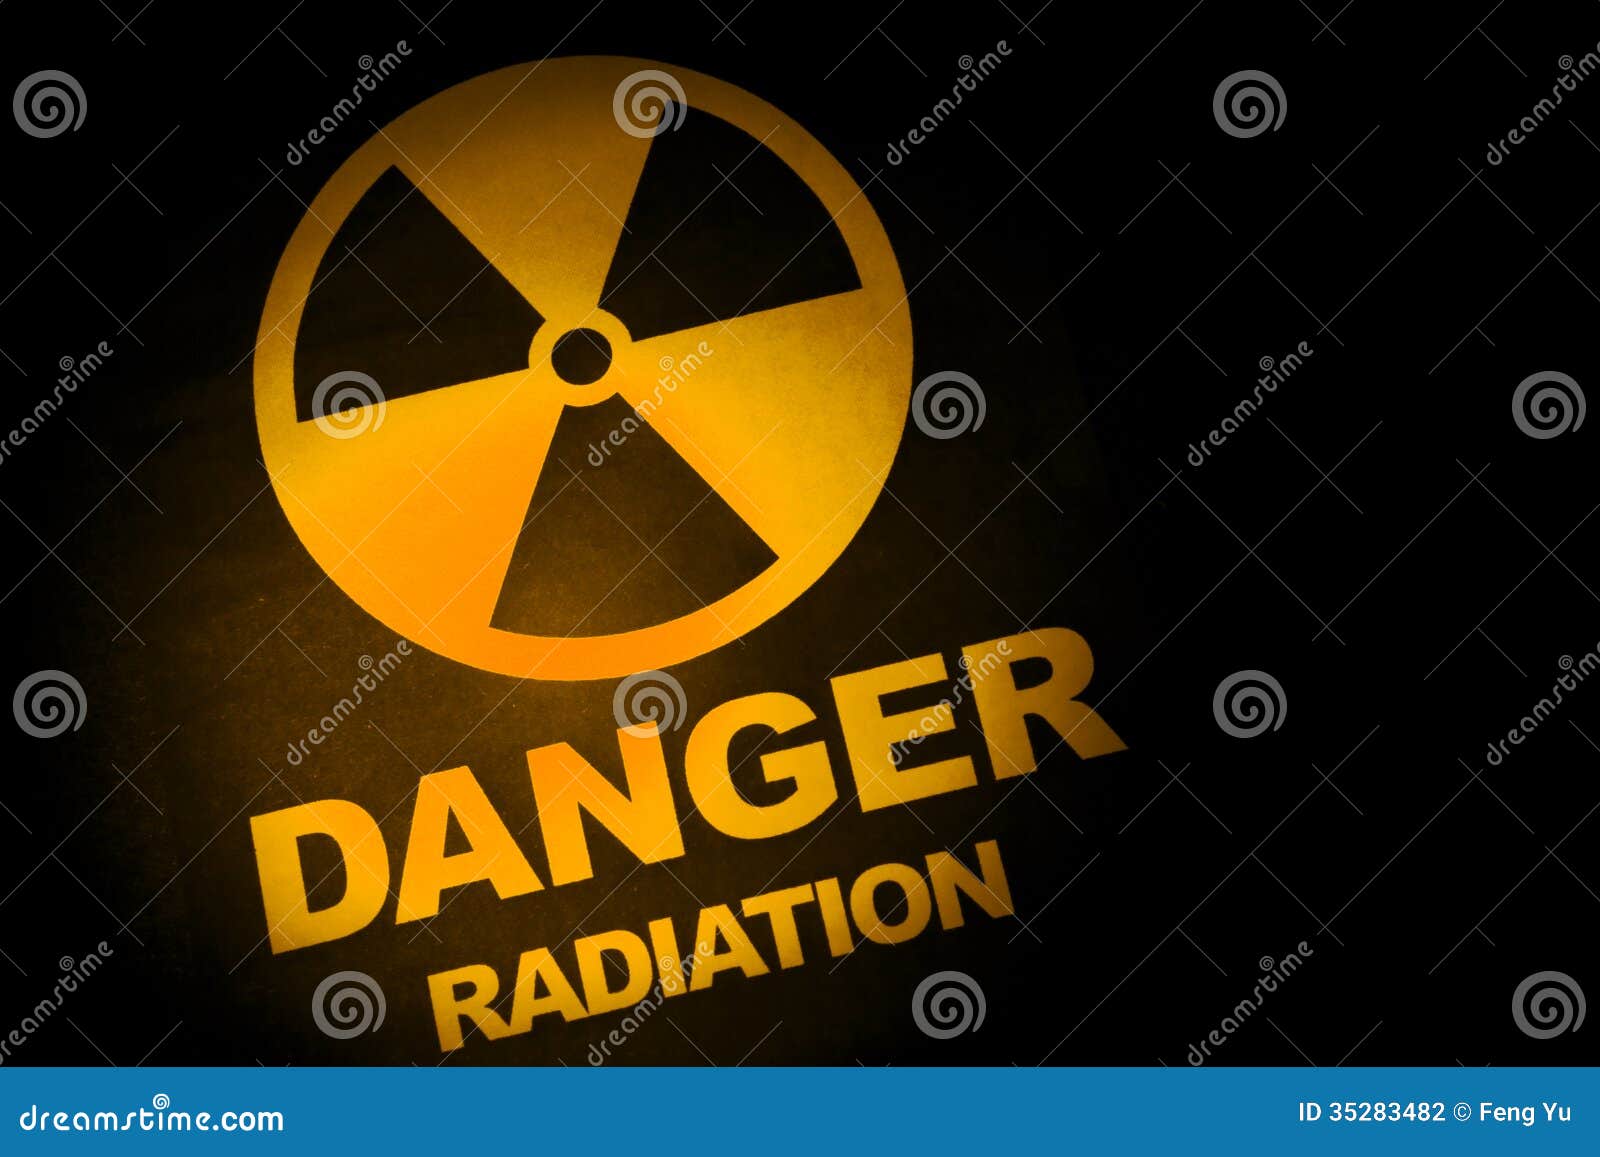 1 975 Radiation Hazard Sign Photos Free Royalty Free Stock Photos From Dreamstime